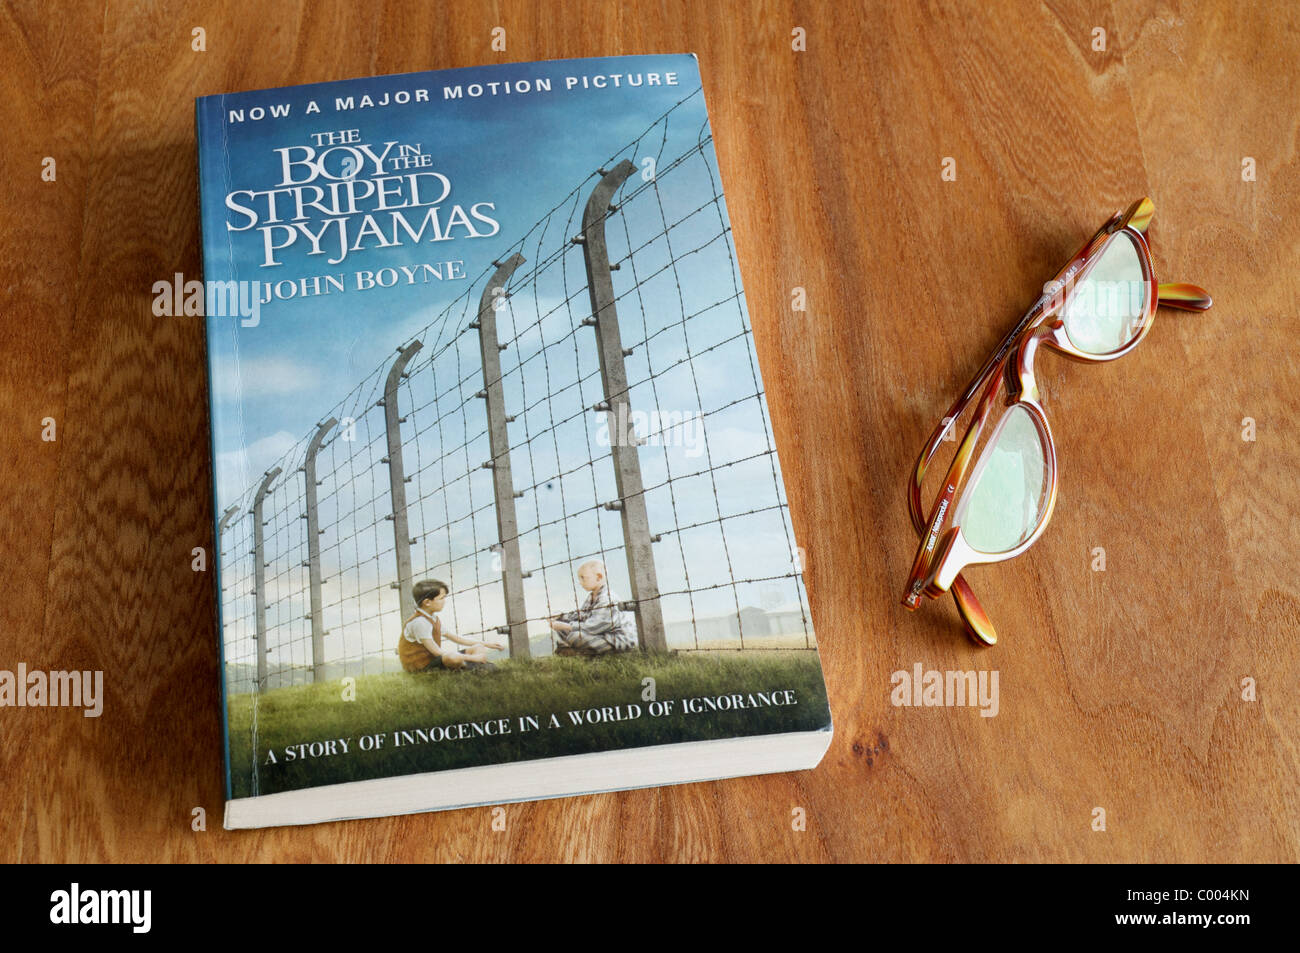 The Boy in the striped pyjamas paperback novel Stock Photo - Alamy